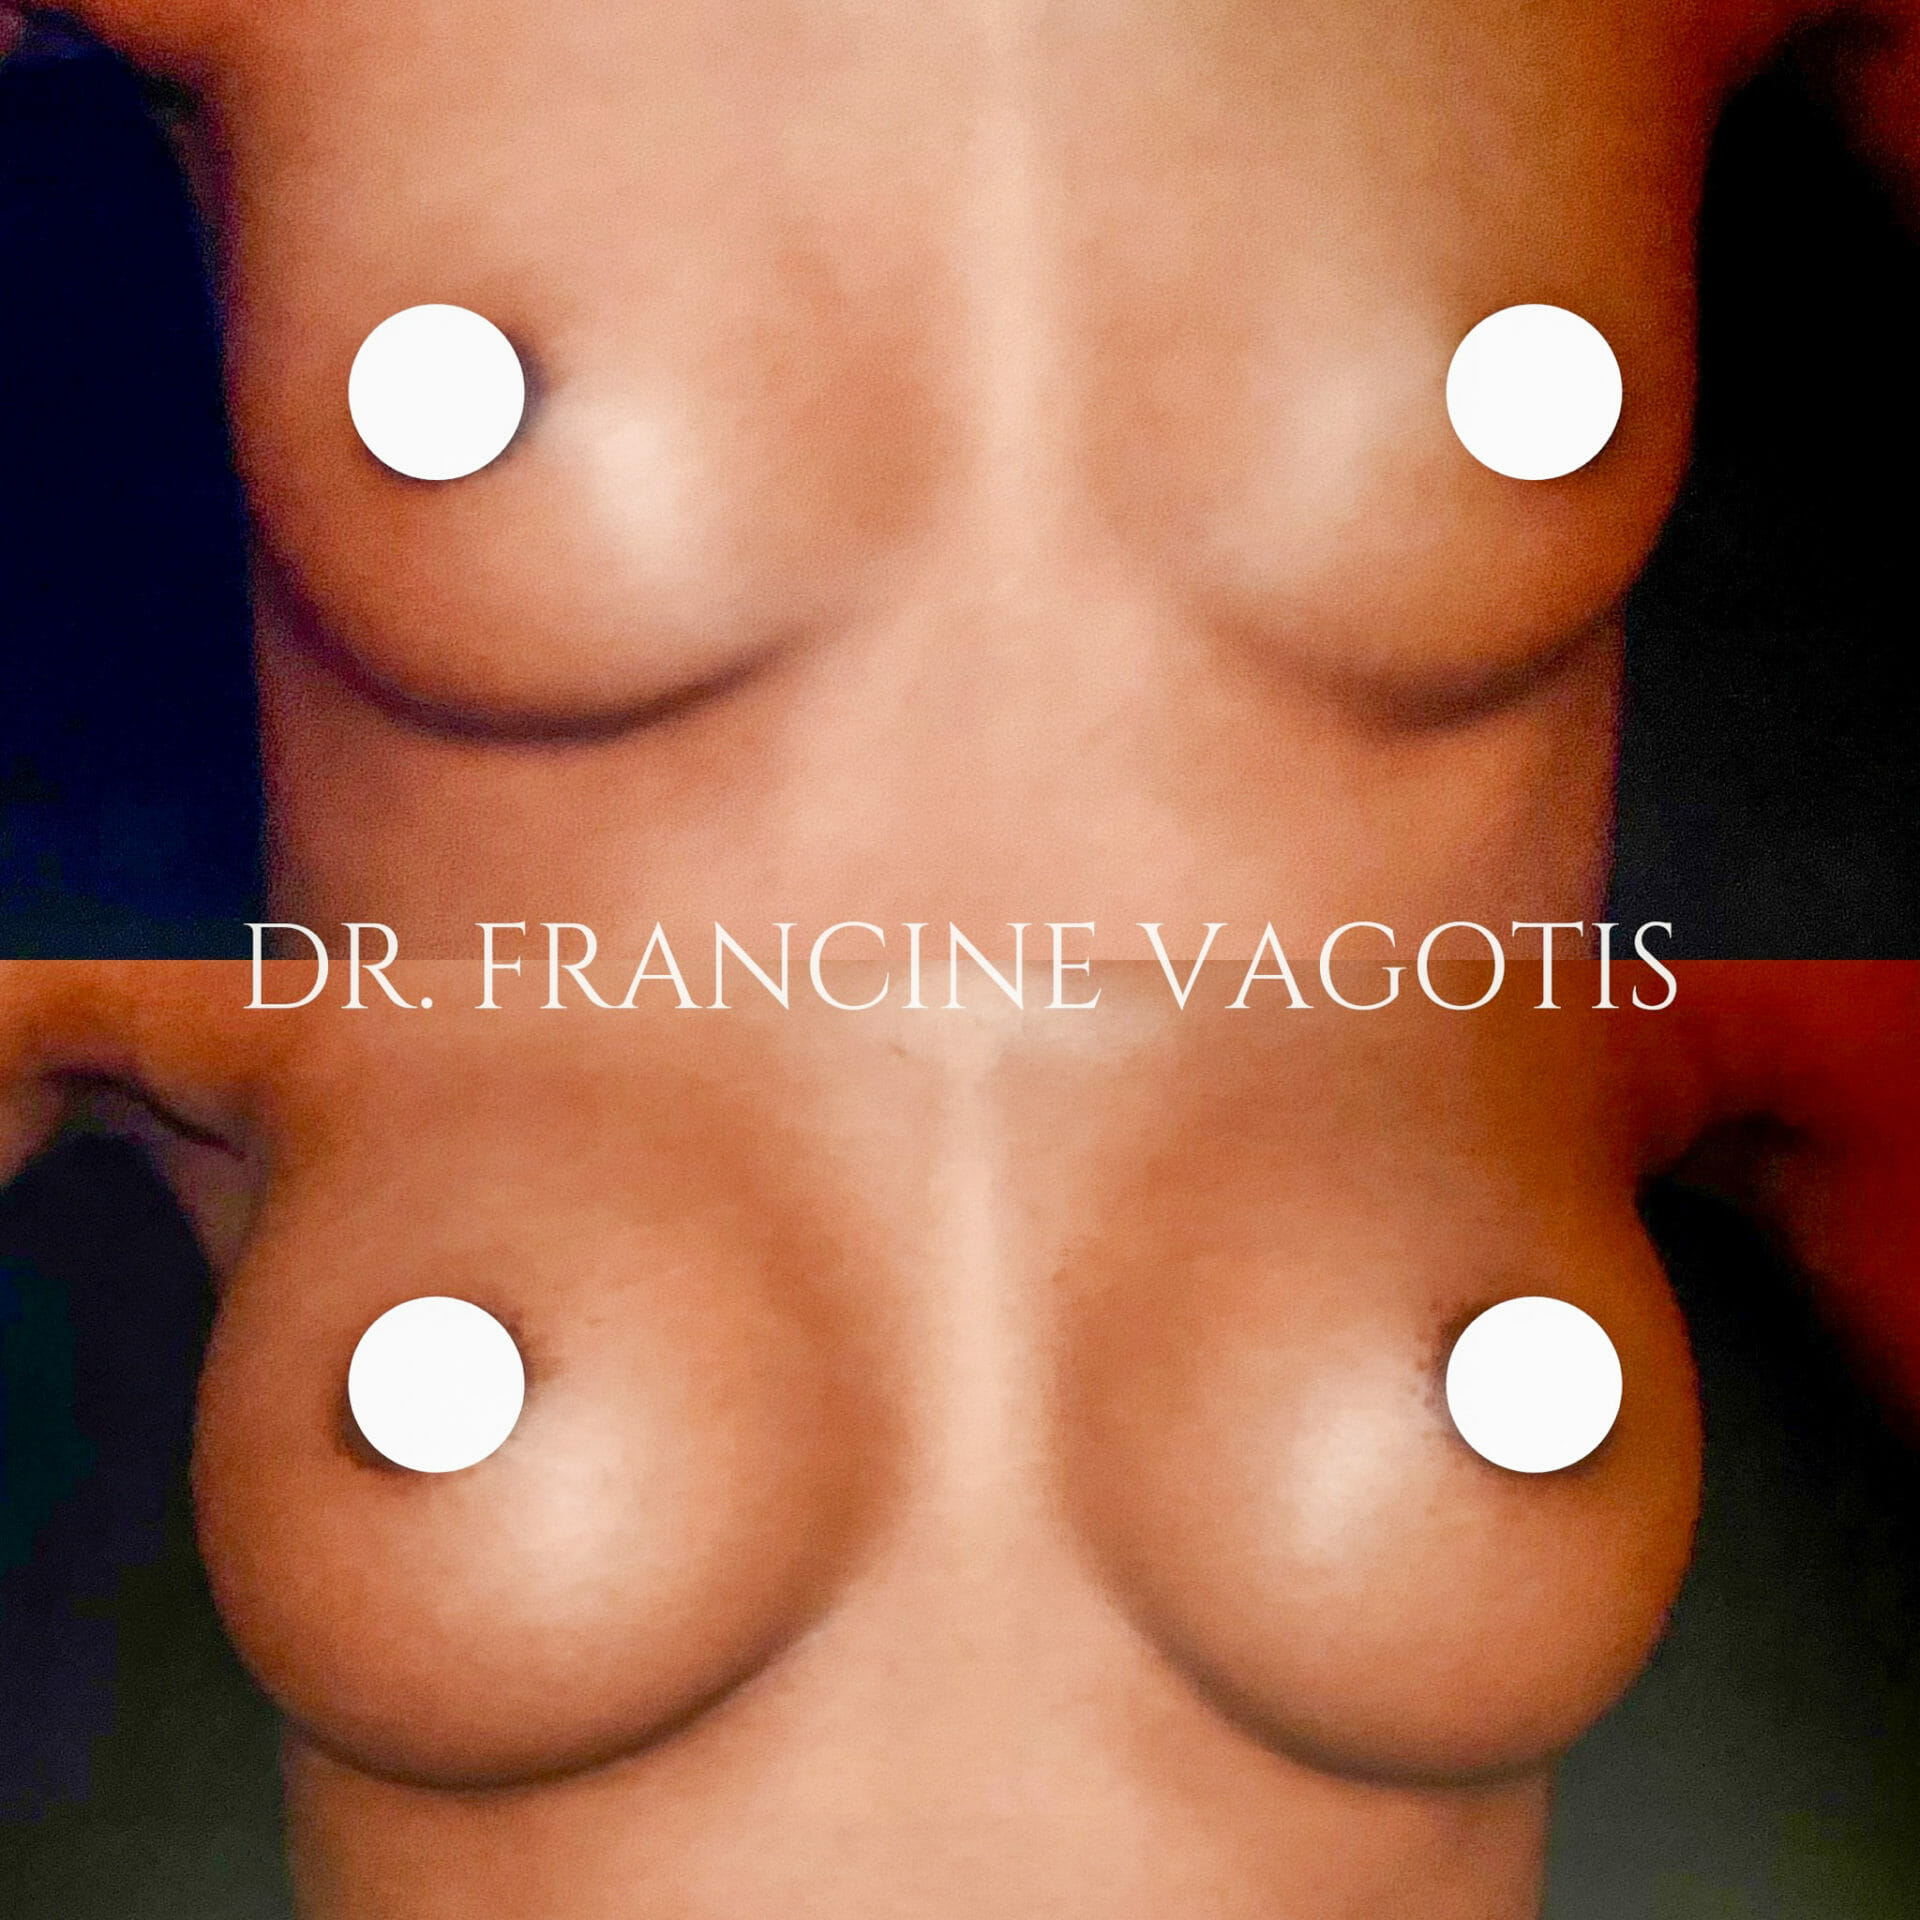 Breast implants before after vagotis